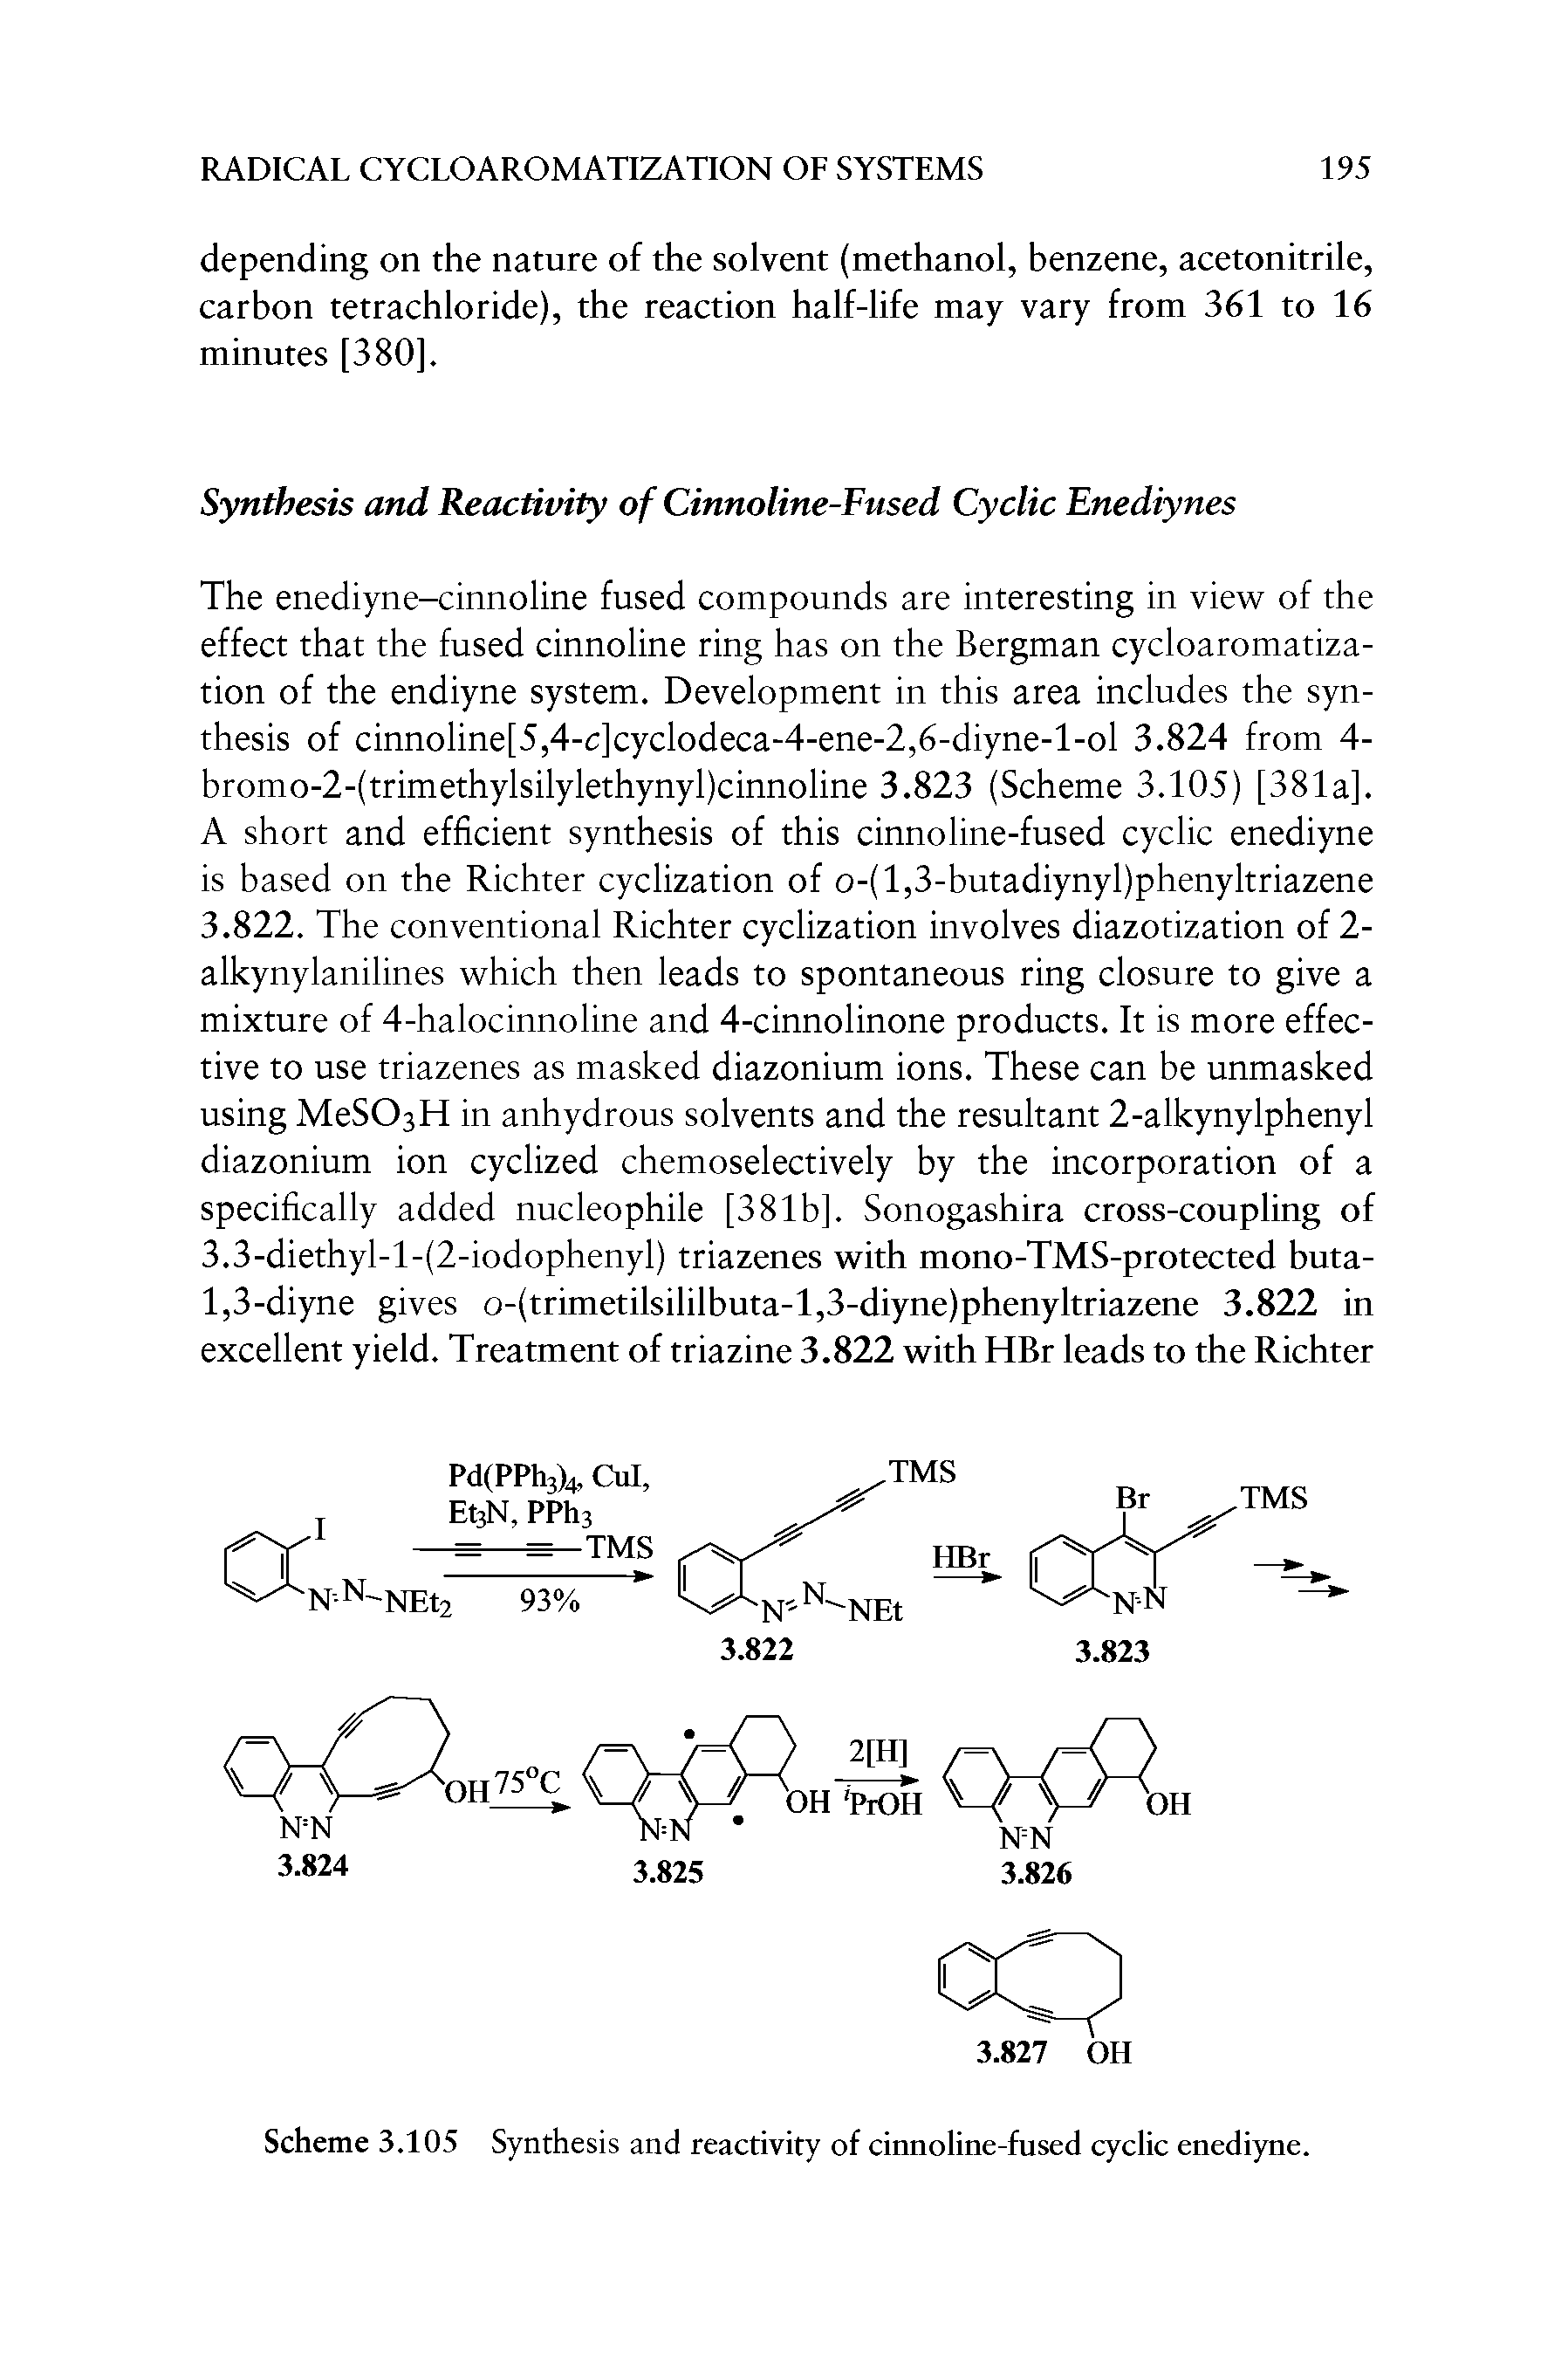 Scheme 3.105 Synthesis and reactivity of cinnoline-fused cyclic enediyne.